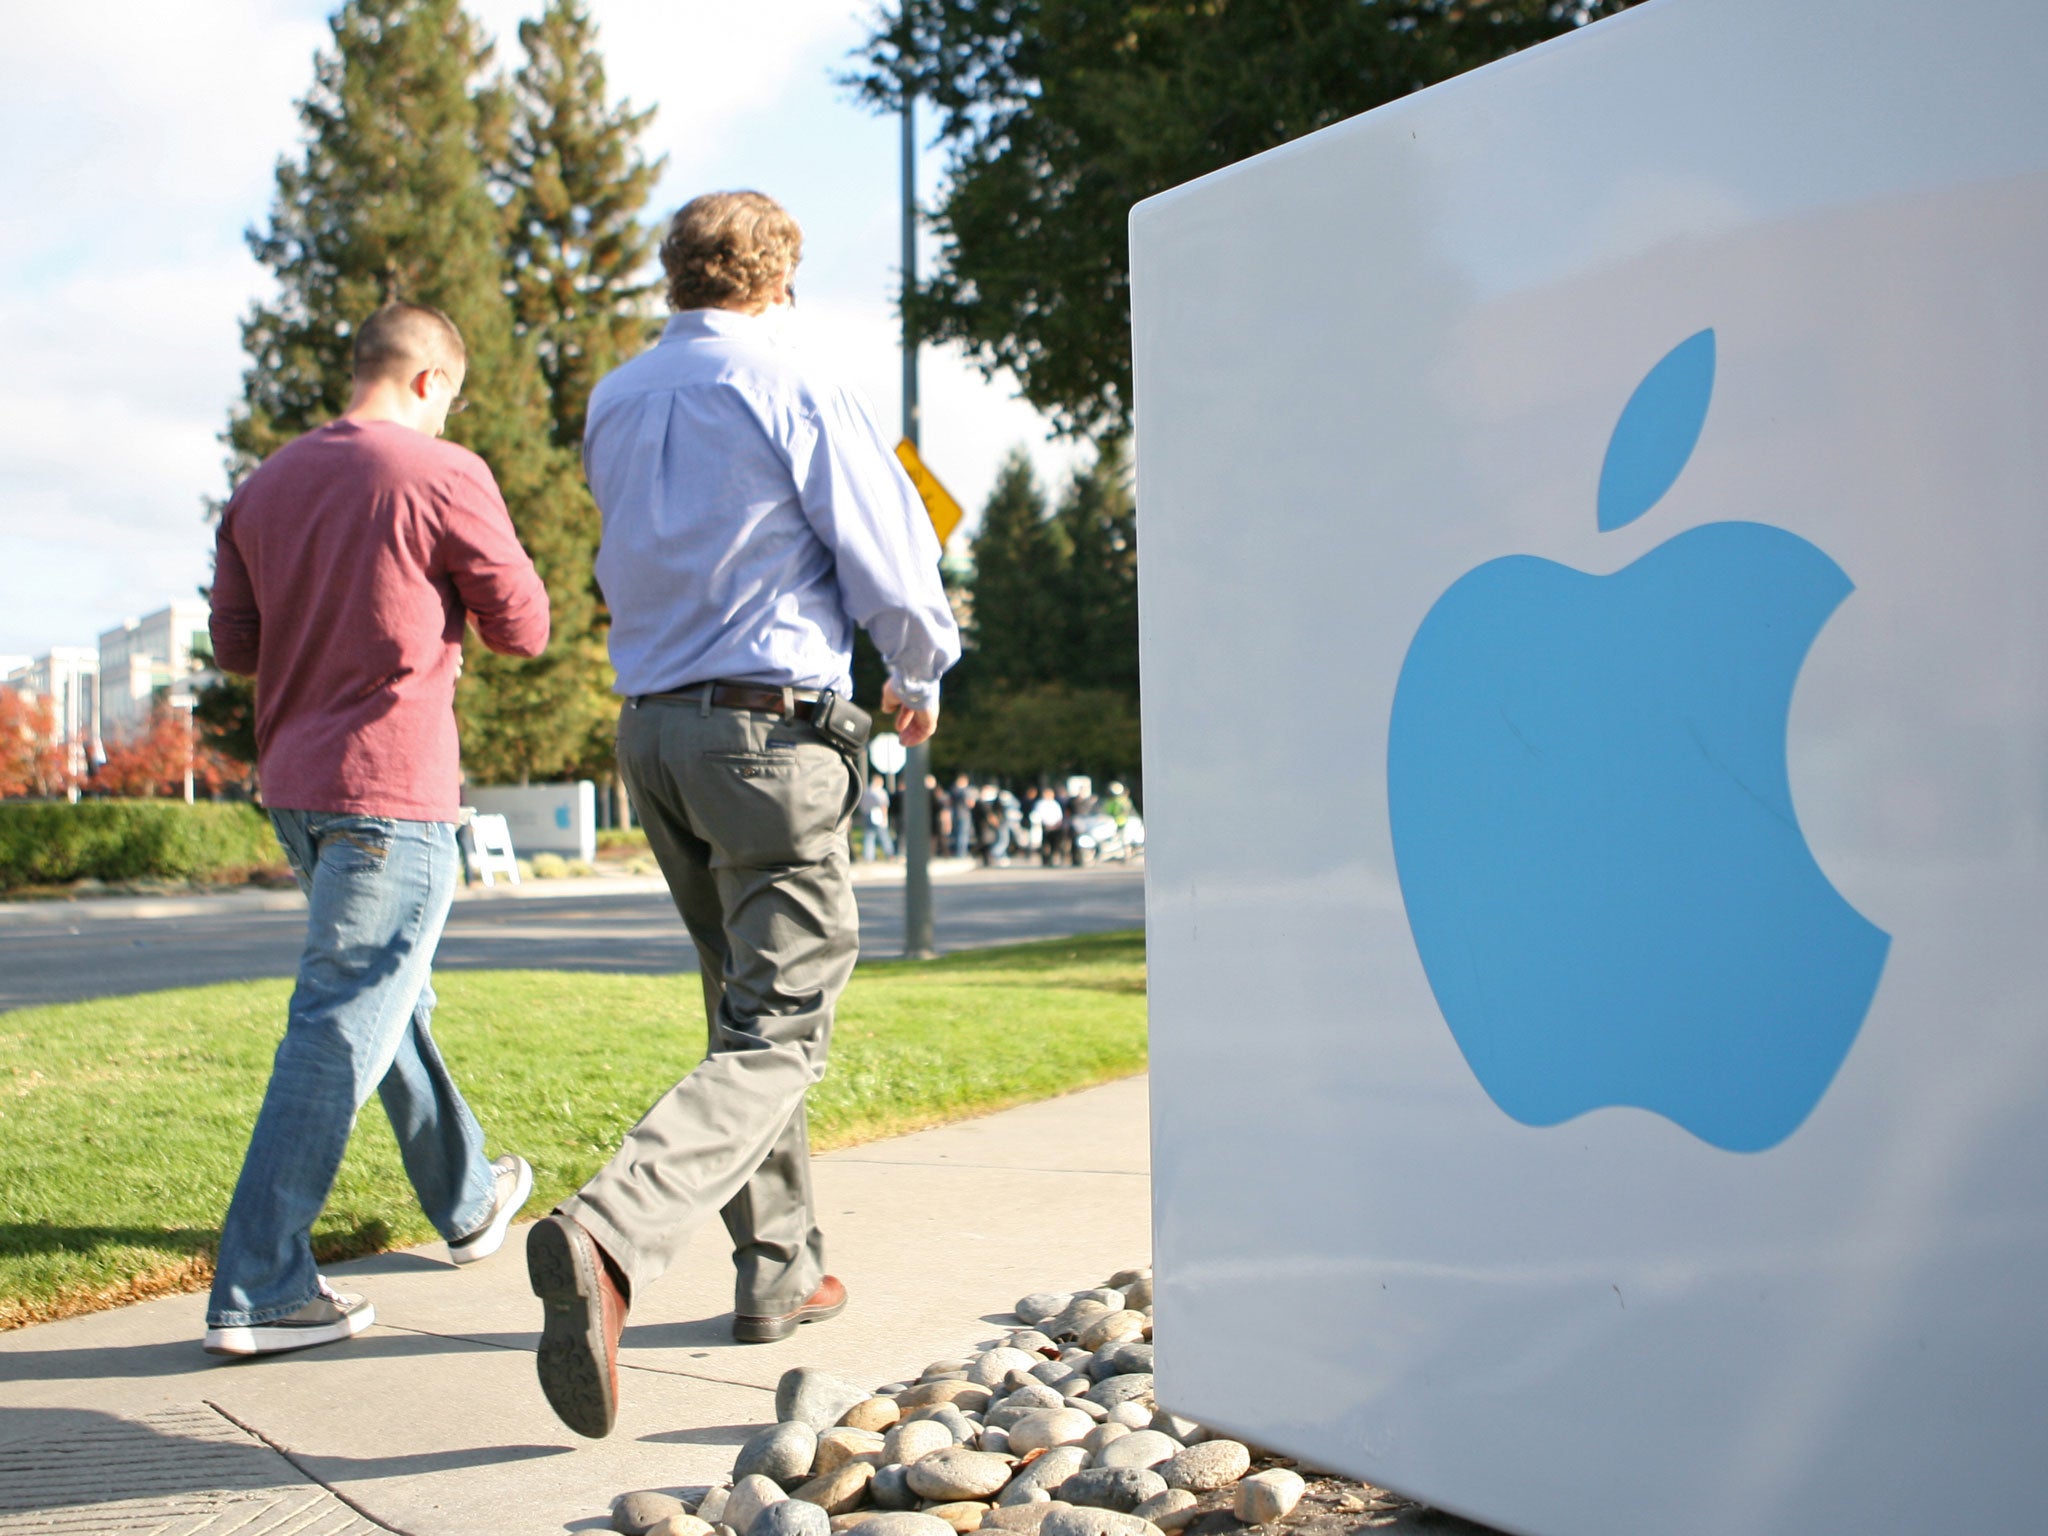 Apple employees walk towards the Apple Headquarters in Cupertino, California